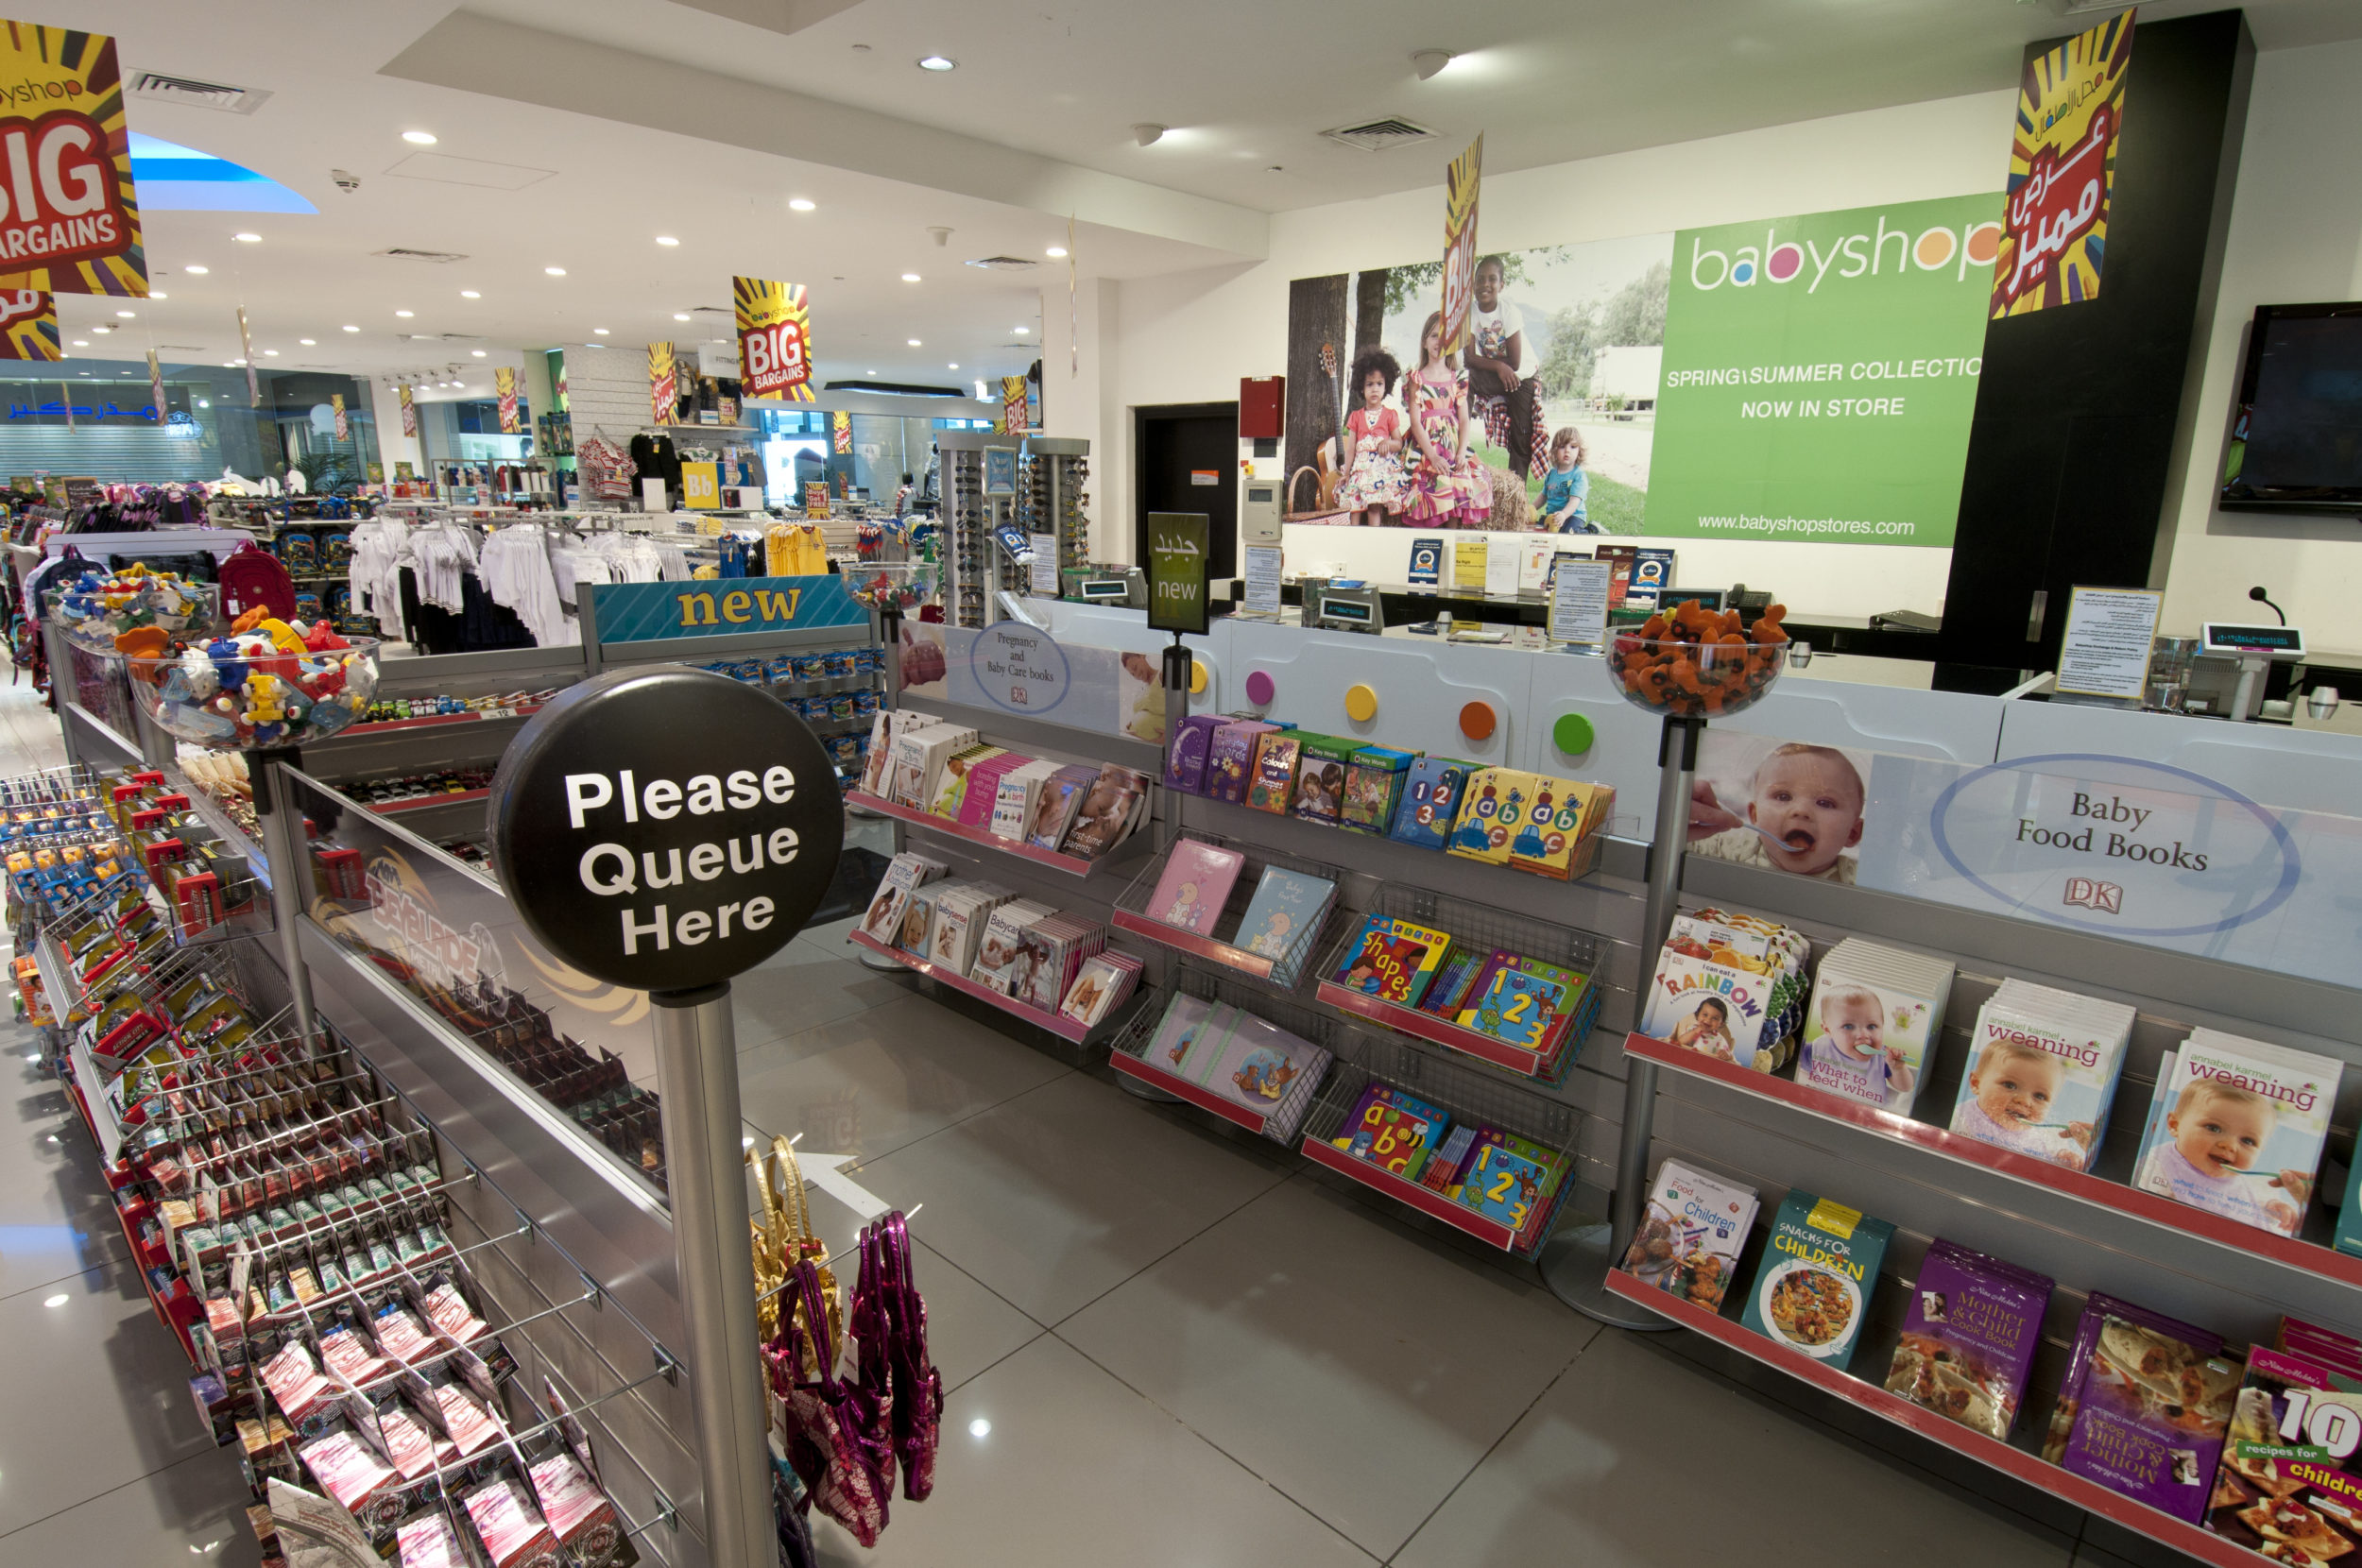 Tensator In-queue merchandising installed in Babyshop Dubai to increase impulse purchases